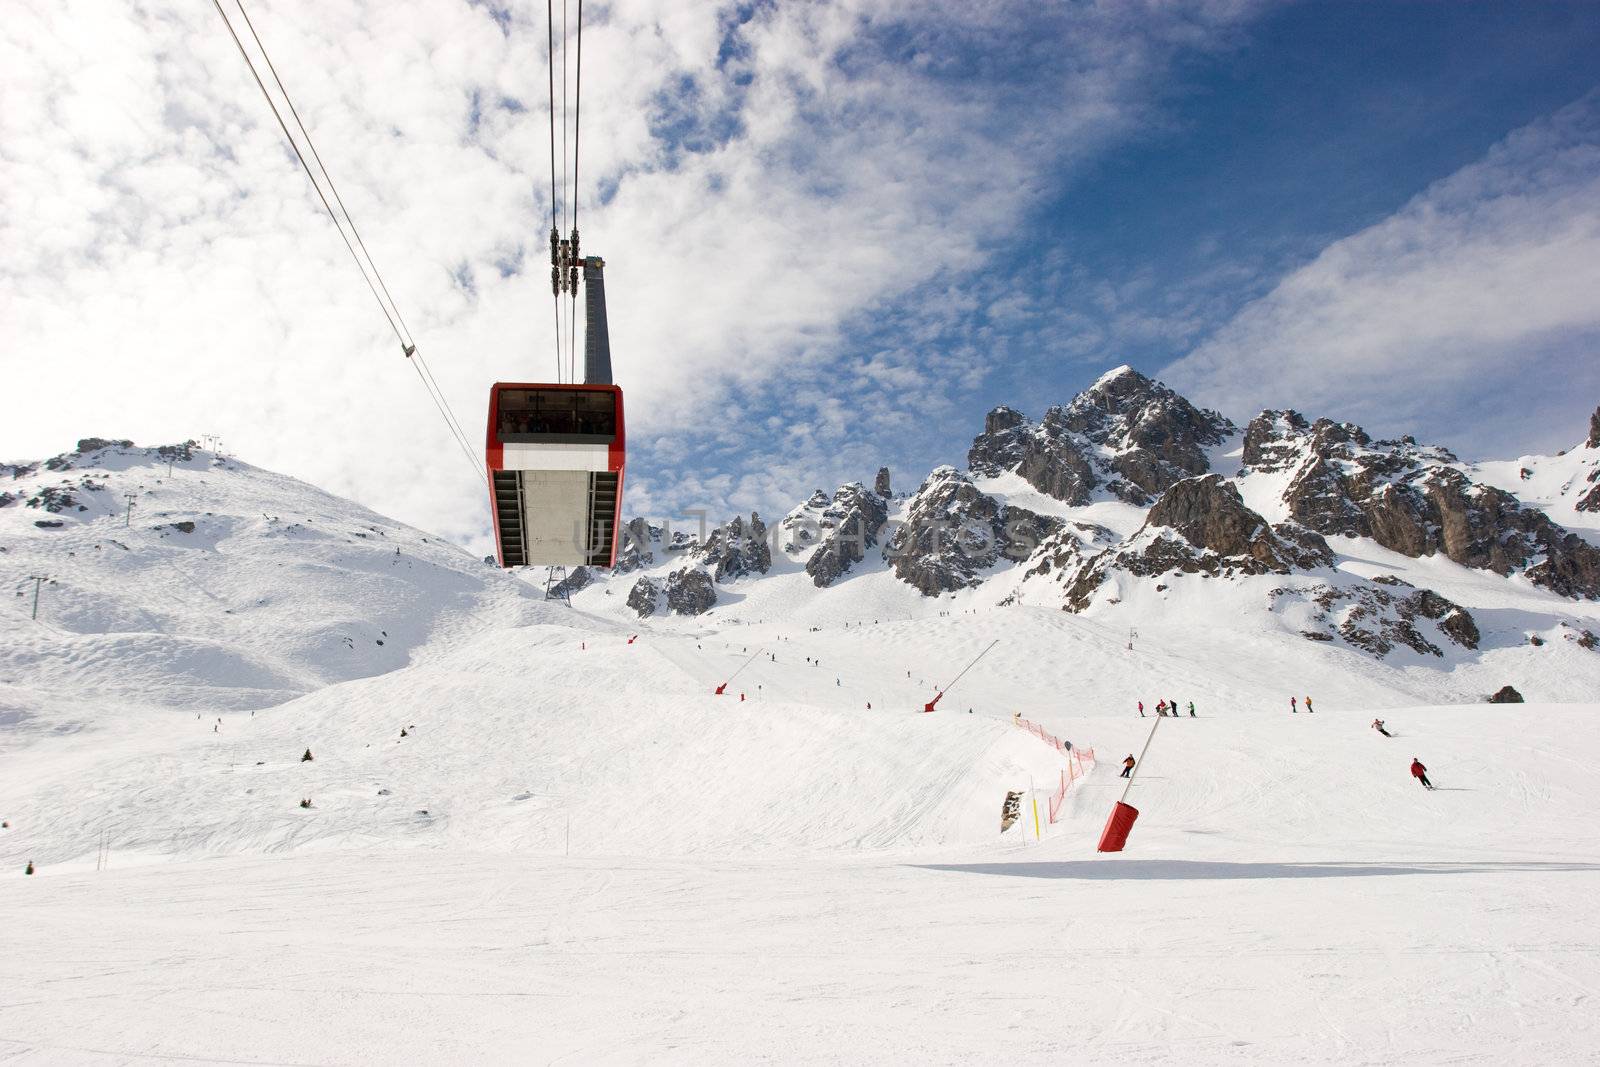 Aerial tramway at ski resort by naumoid